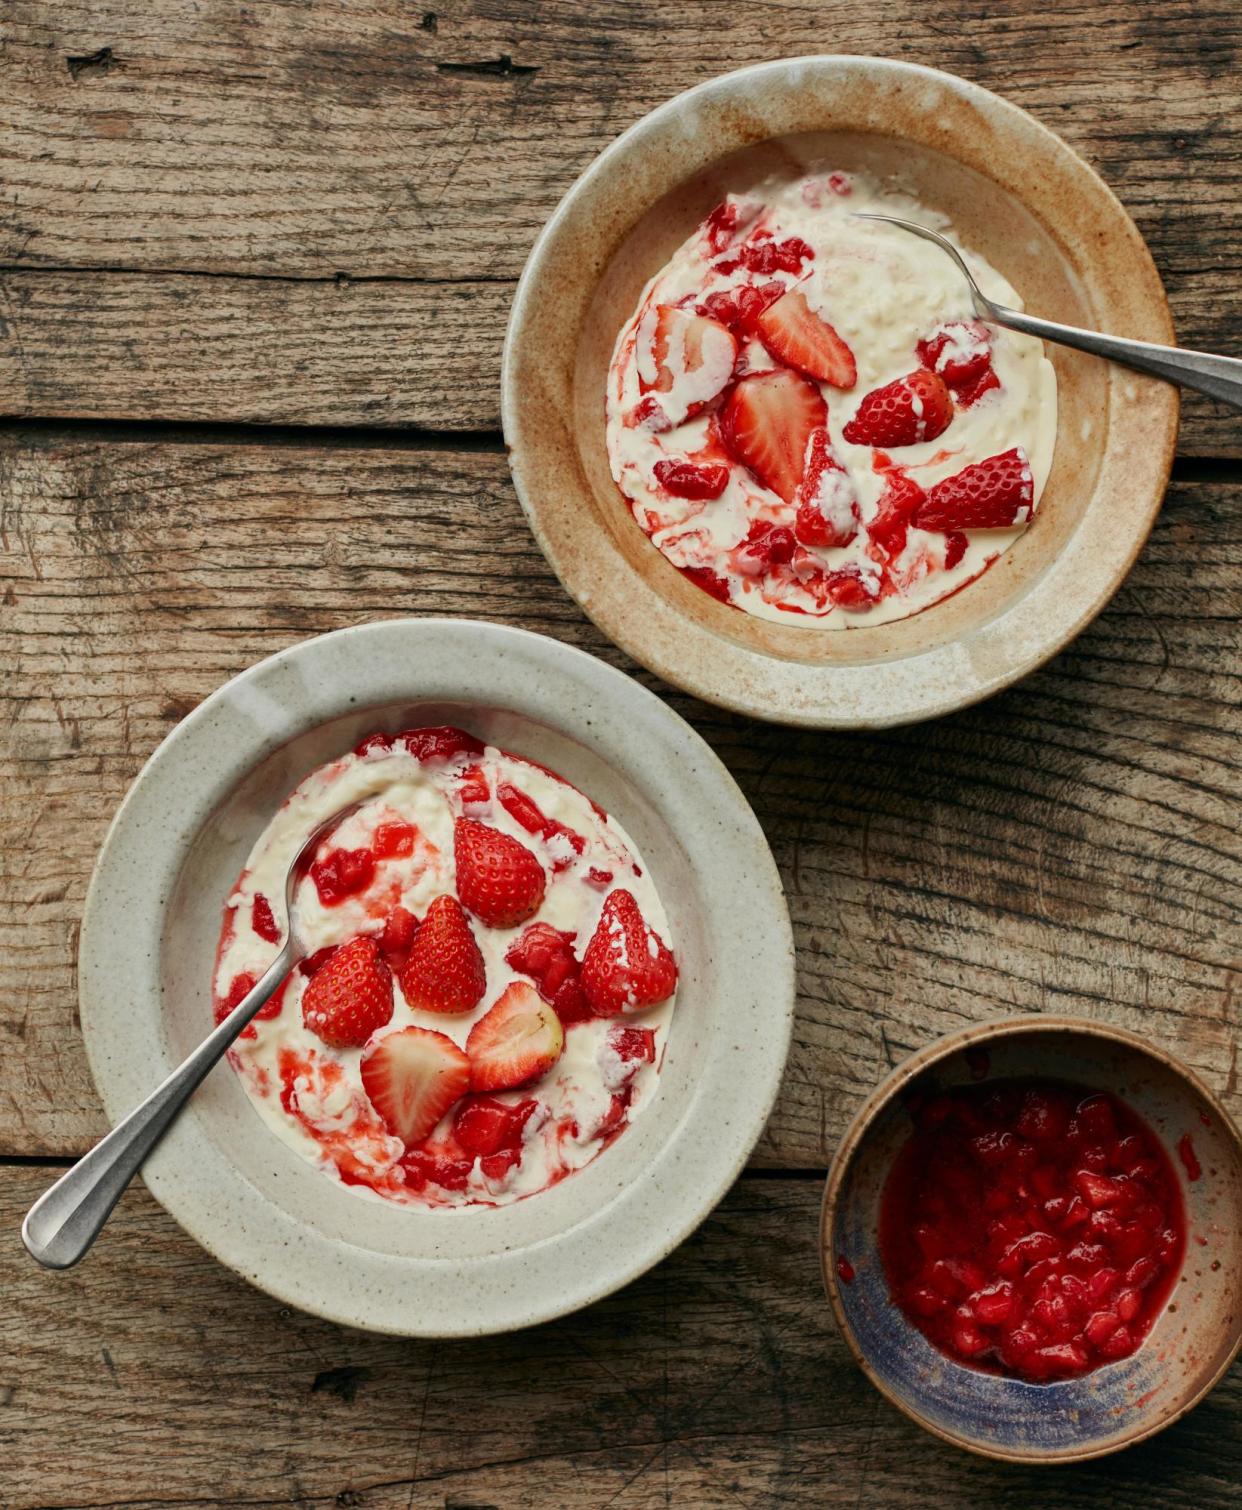 <span>Benjamina Ebuehi’s strawberries and cream rice pudding.</span><span>Photograph: Laura Edwards/The Guardian. Food styling: Benjamina Ebuehi. Prop styling: Anna Wilkins. Food styling assistant: Lara Cook.</span>